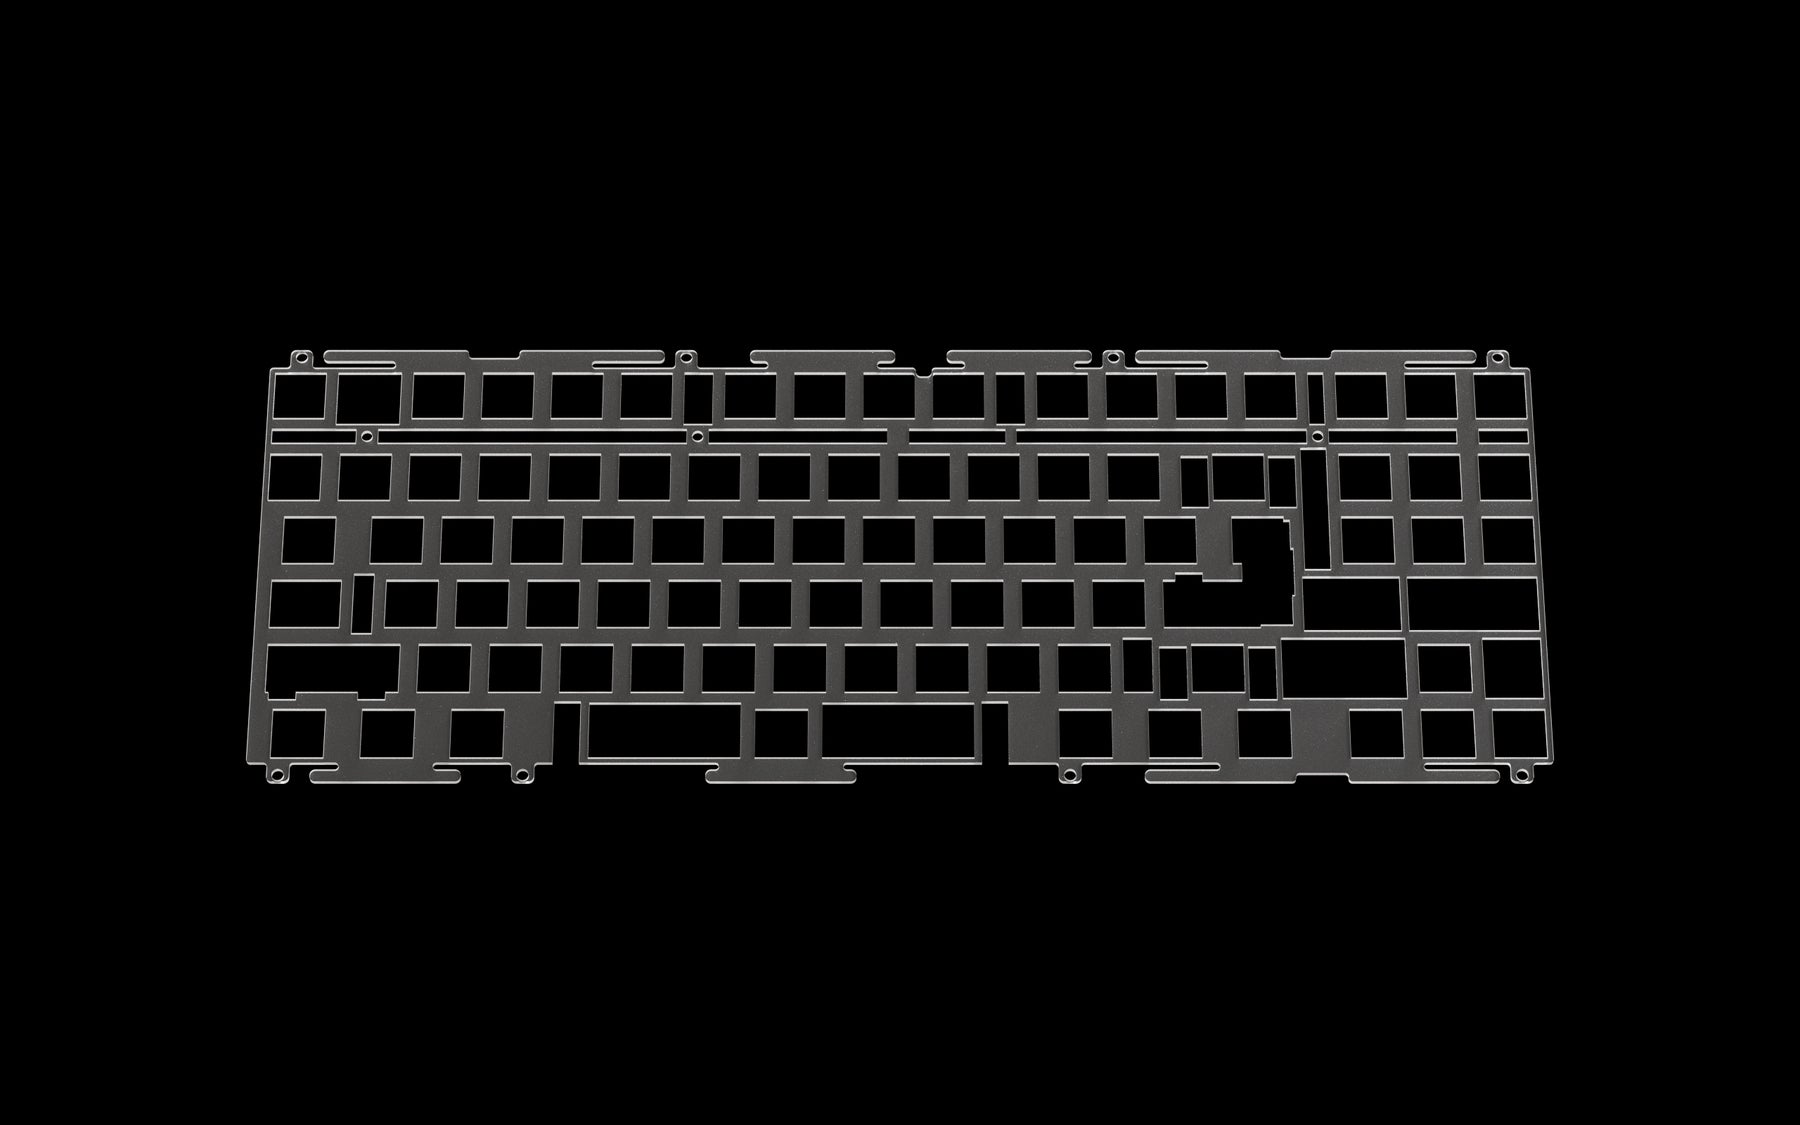 Matrix 8XV 3.0 Keyboard Kit - Extras